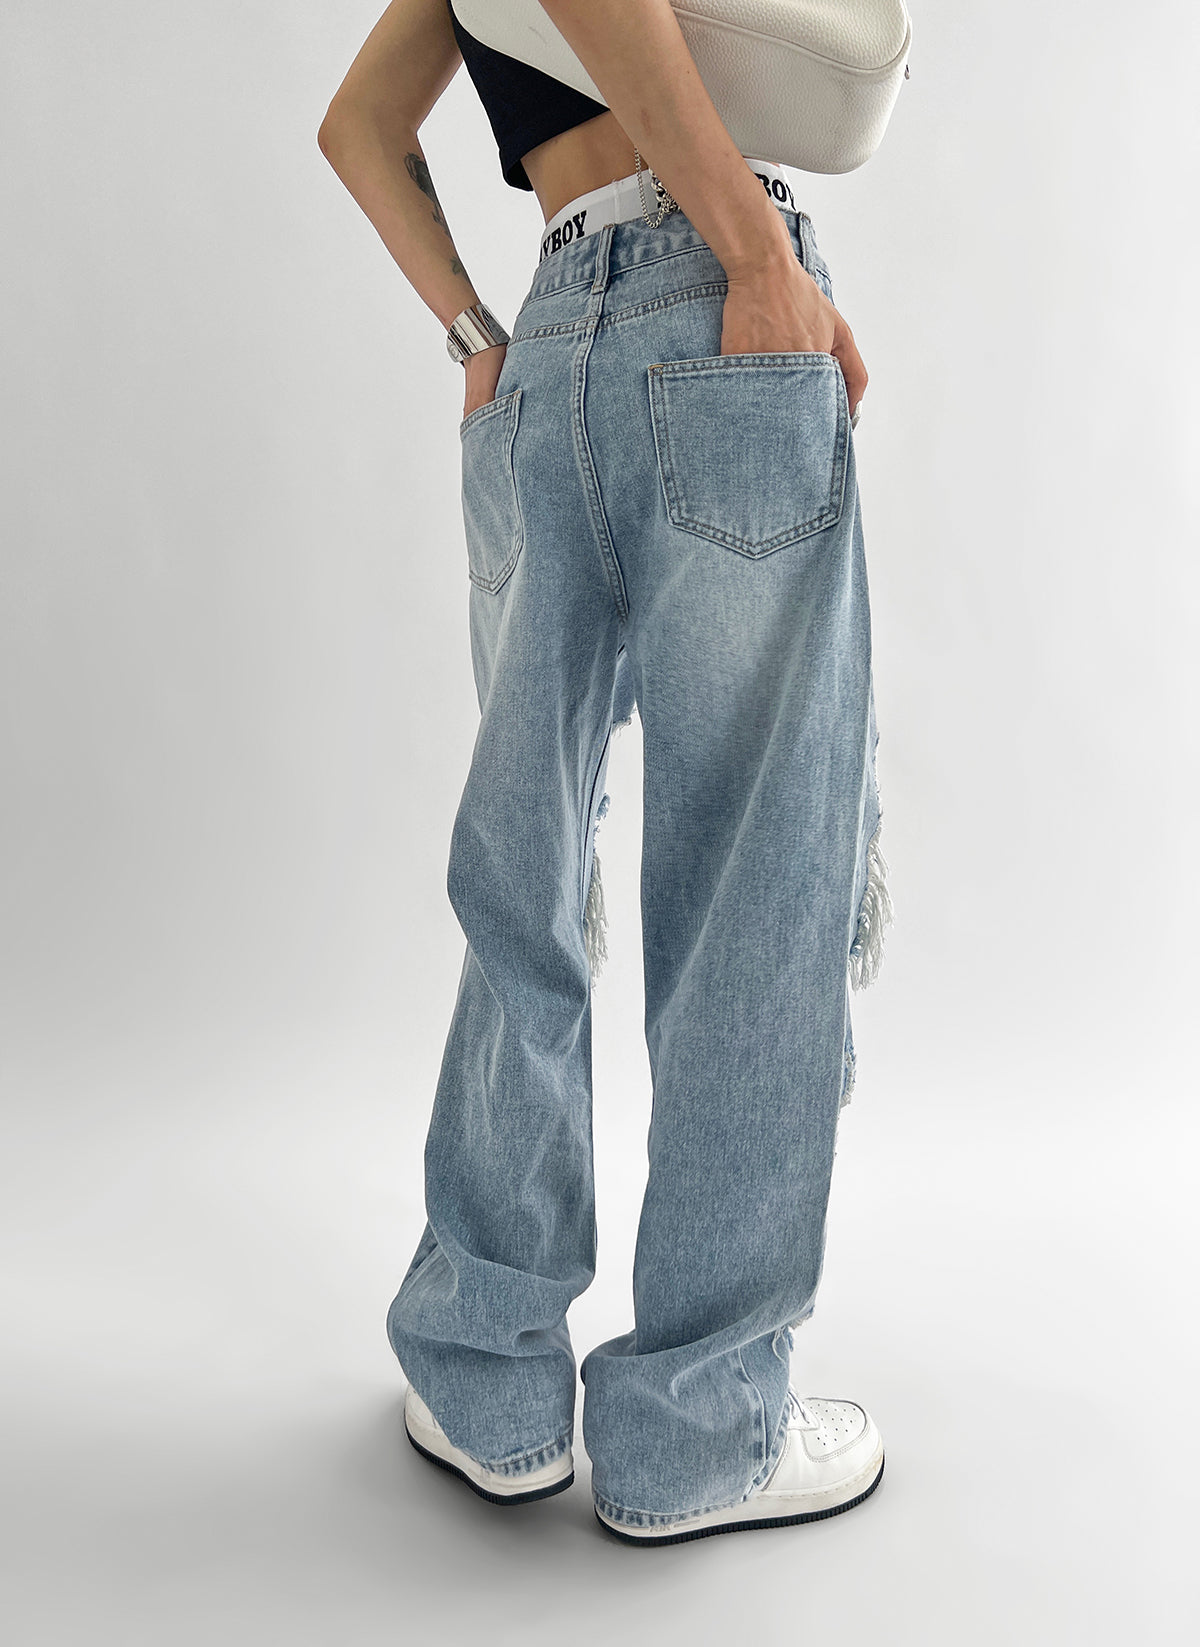 Women's Ripped Wash High Waist Jeans